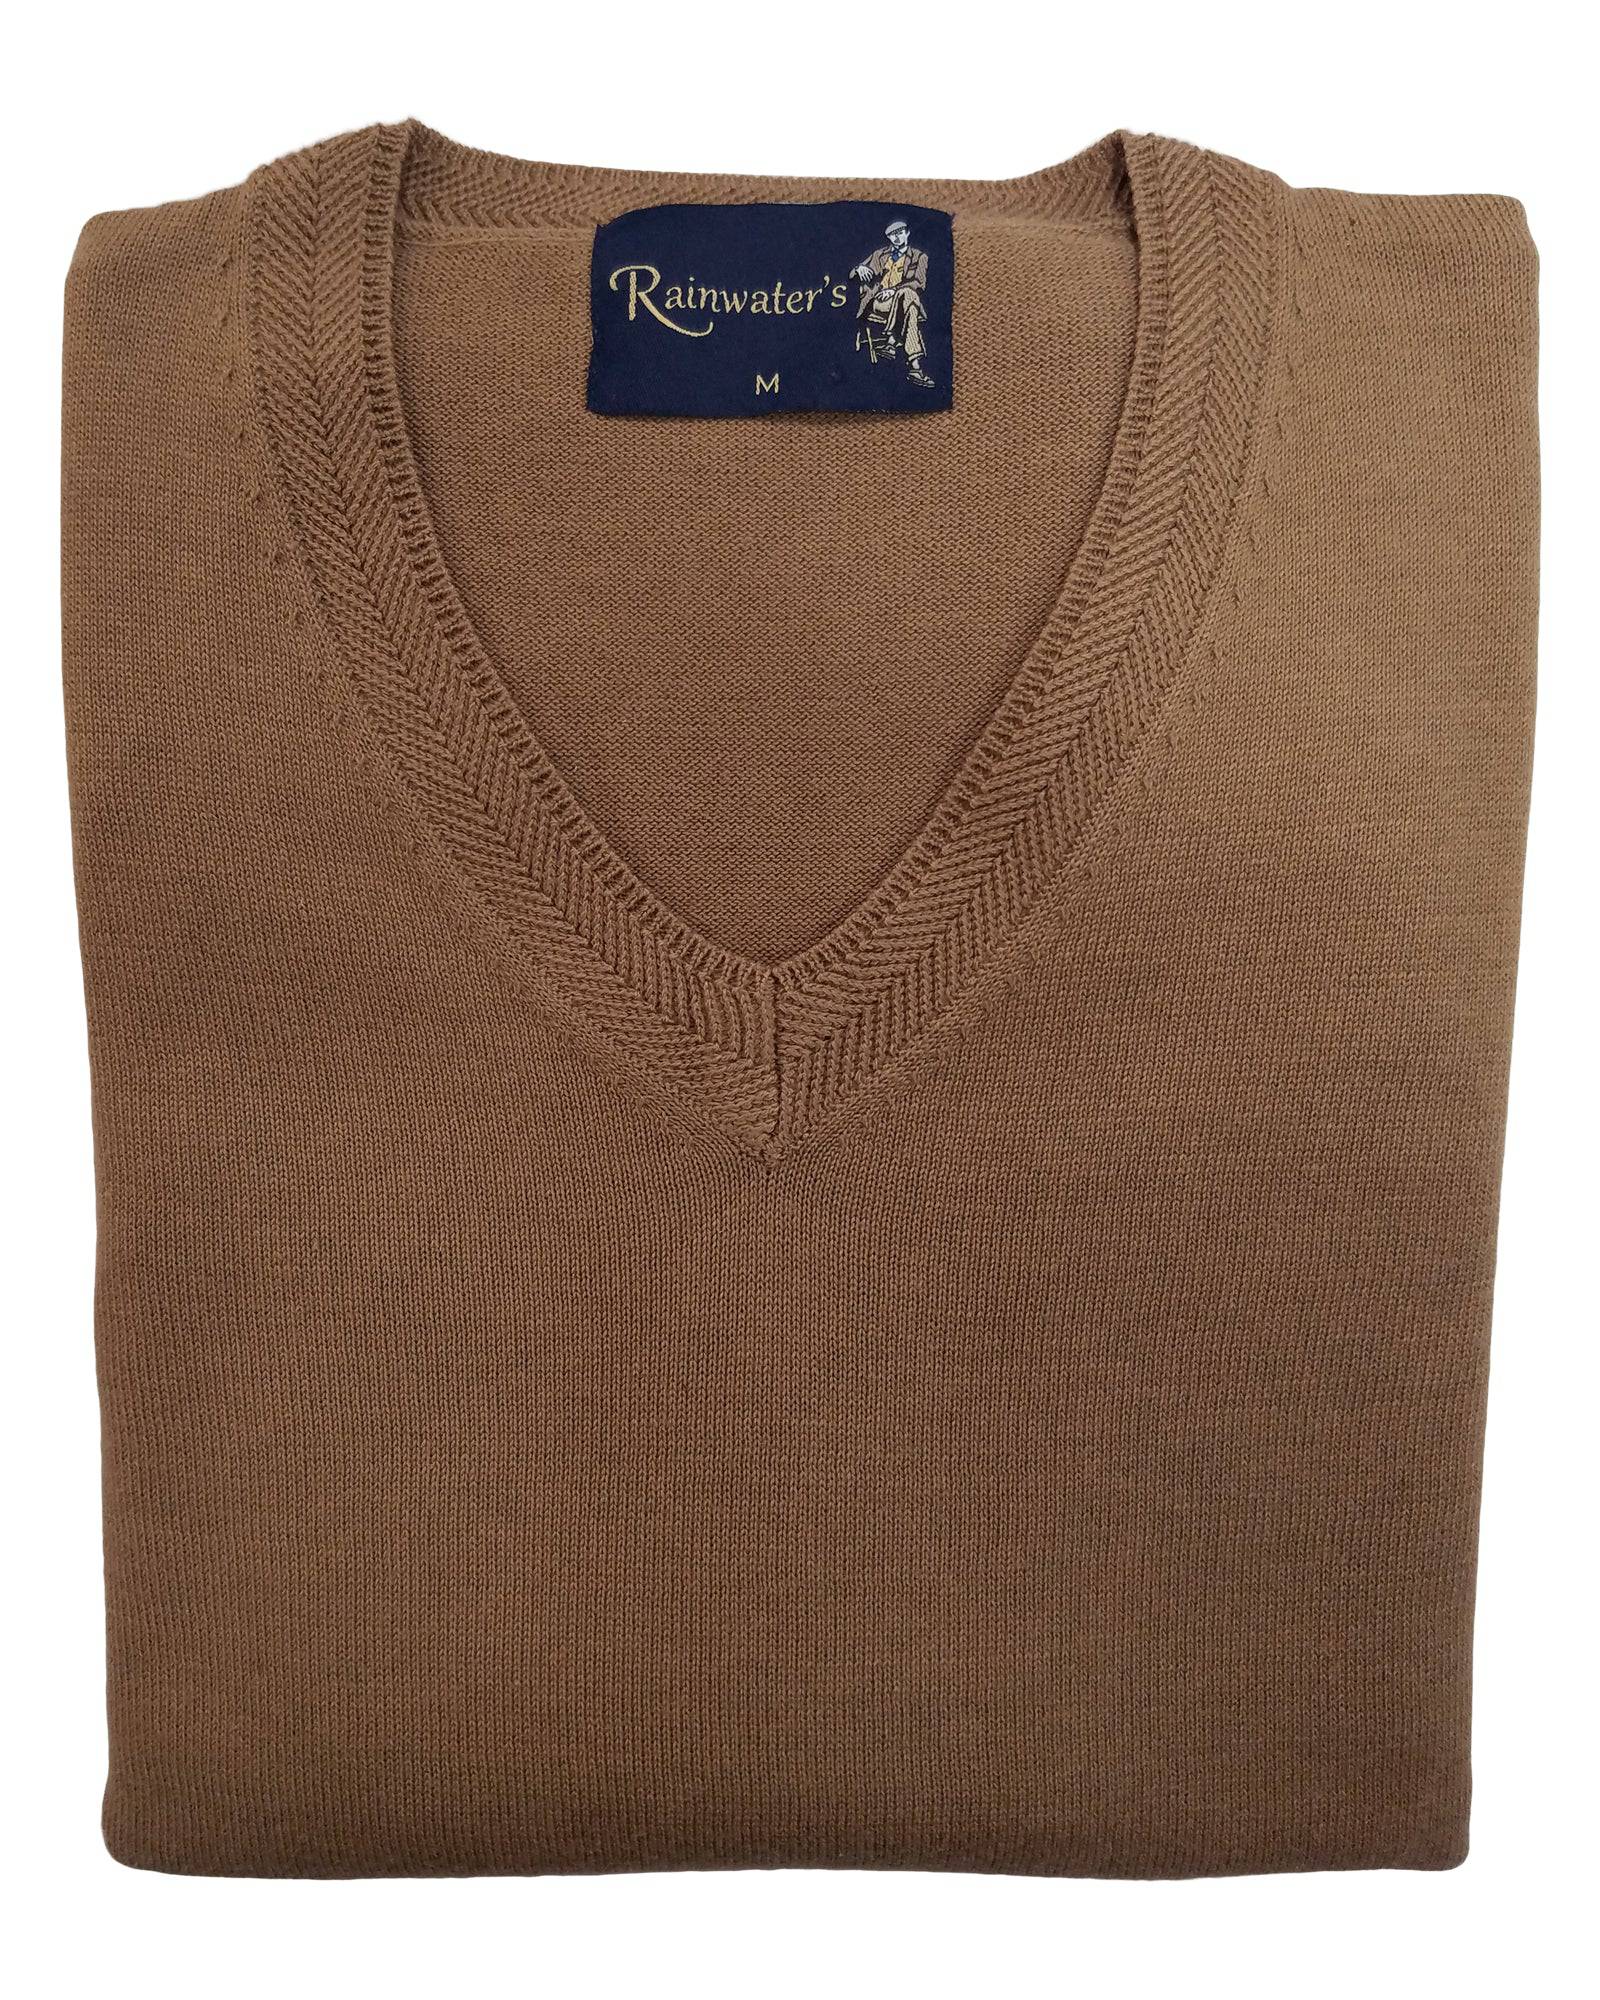 V-Neck Sweater Cotton Blend in Tan - Rainwater's Men's Clothing and Tuxedo Rental